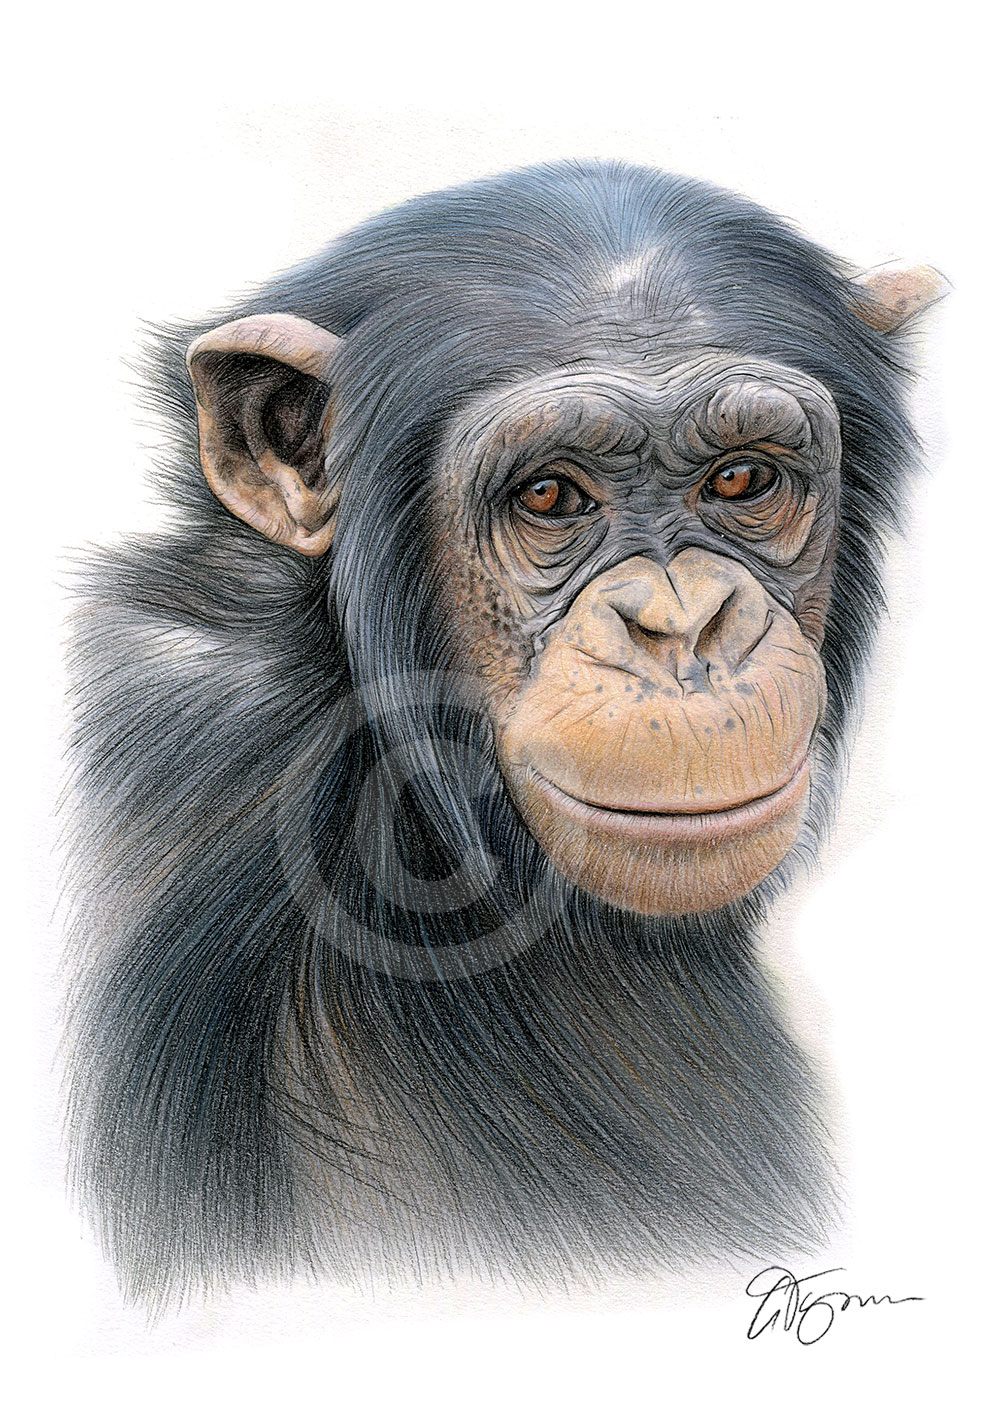 Colour pencil drawing of a chimpanzee by UK artist Gary Tymon